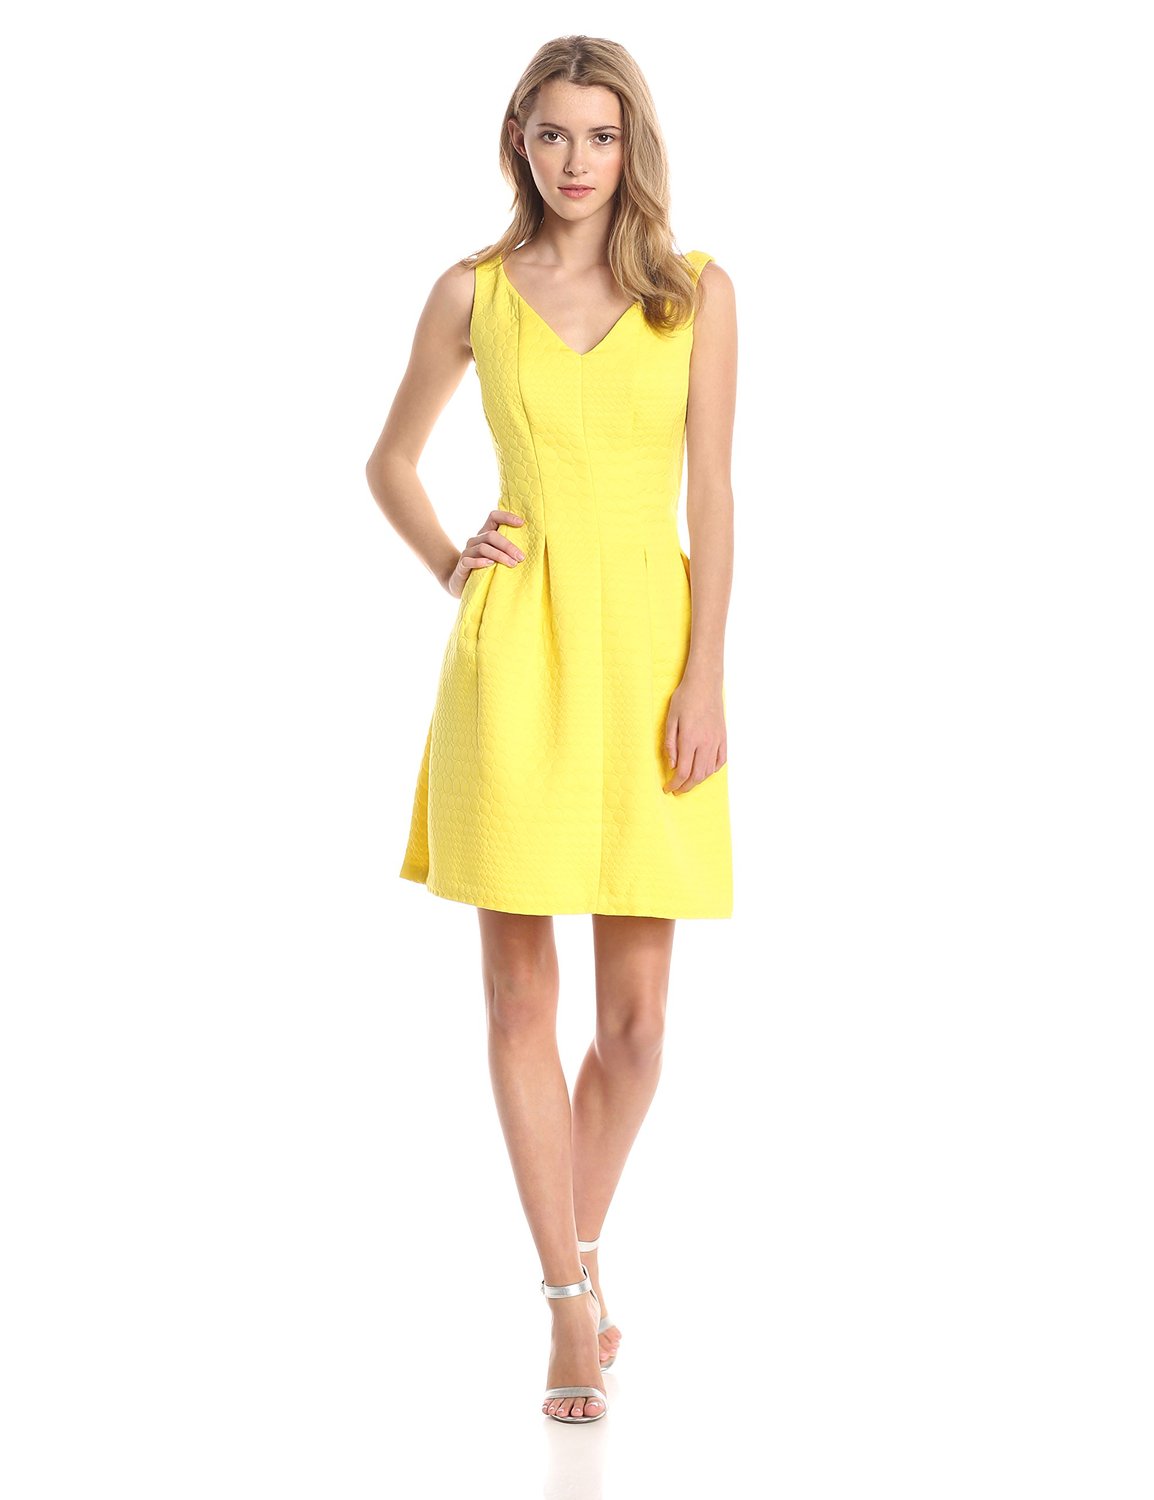 Lemon yellow Taylor Dresses Womens Bubble Jacquard Fit and Flare Dress